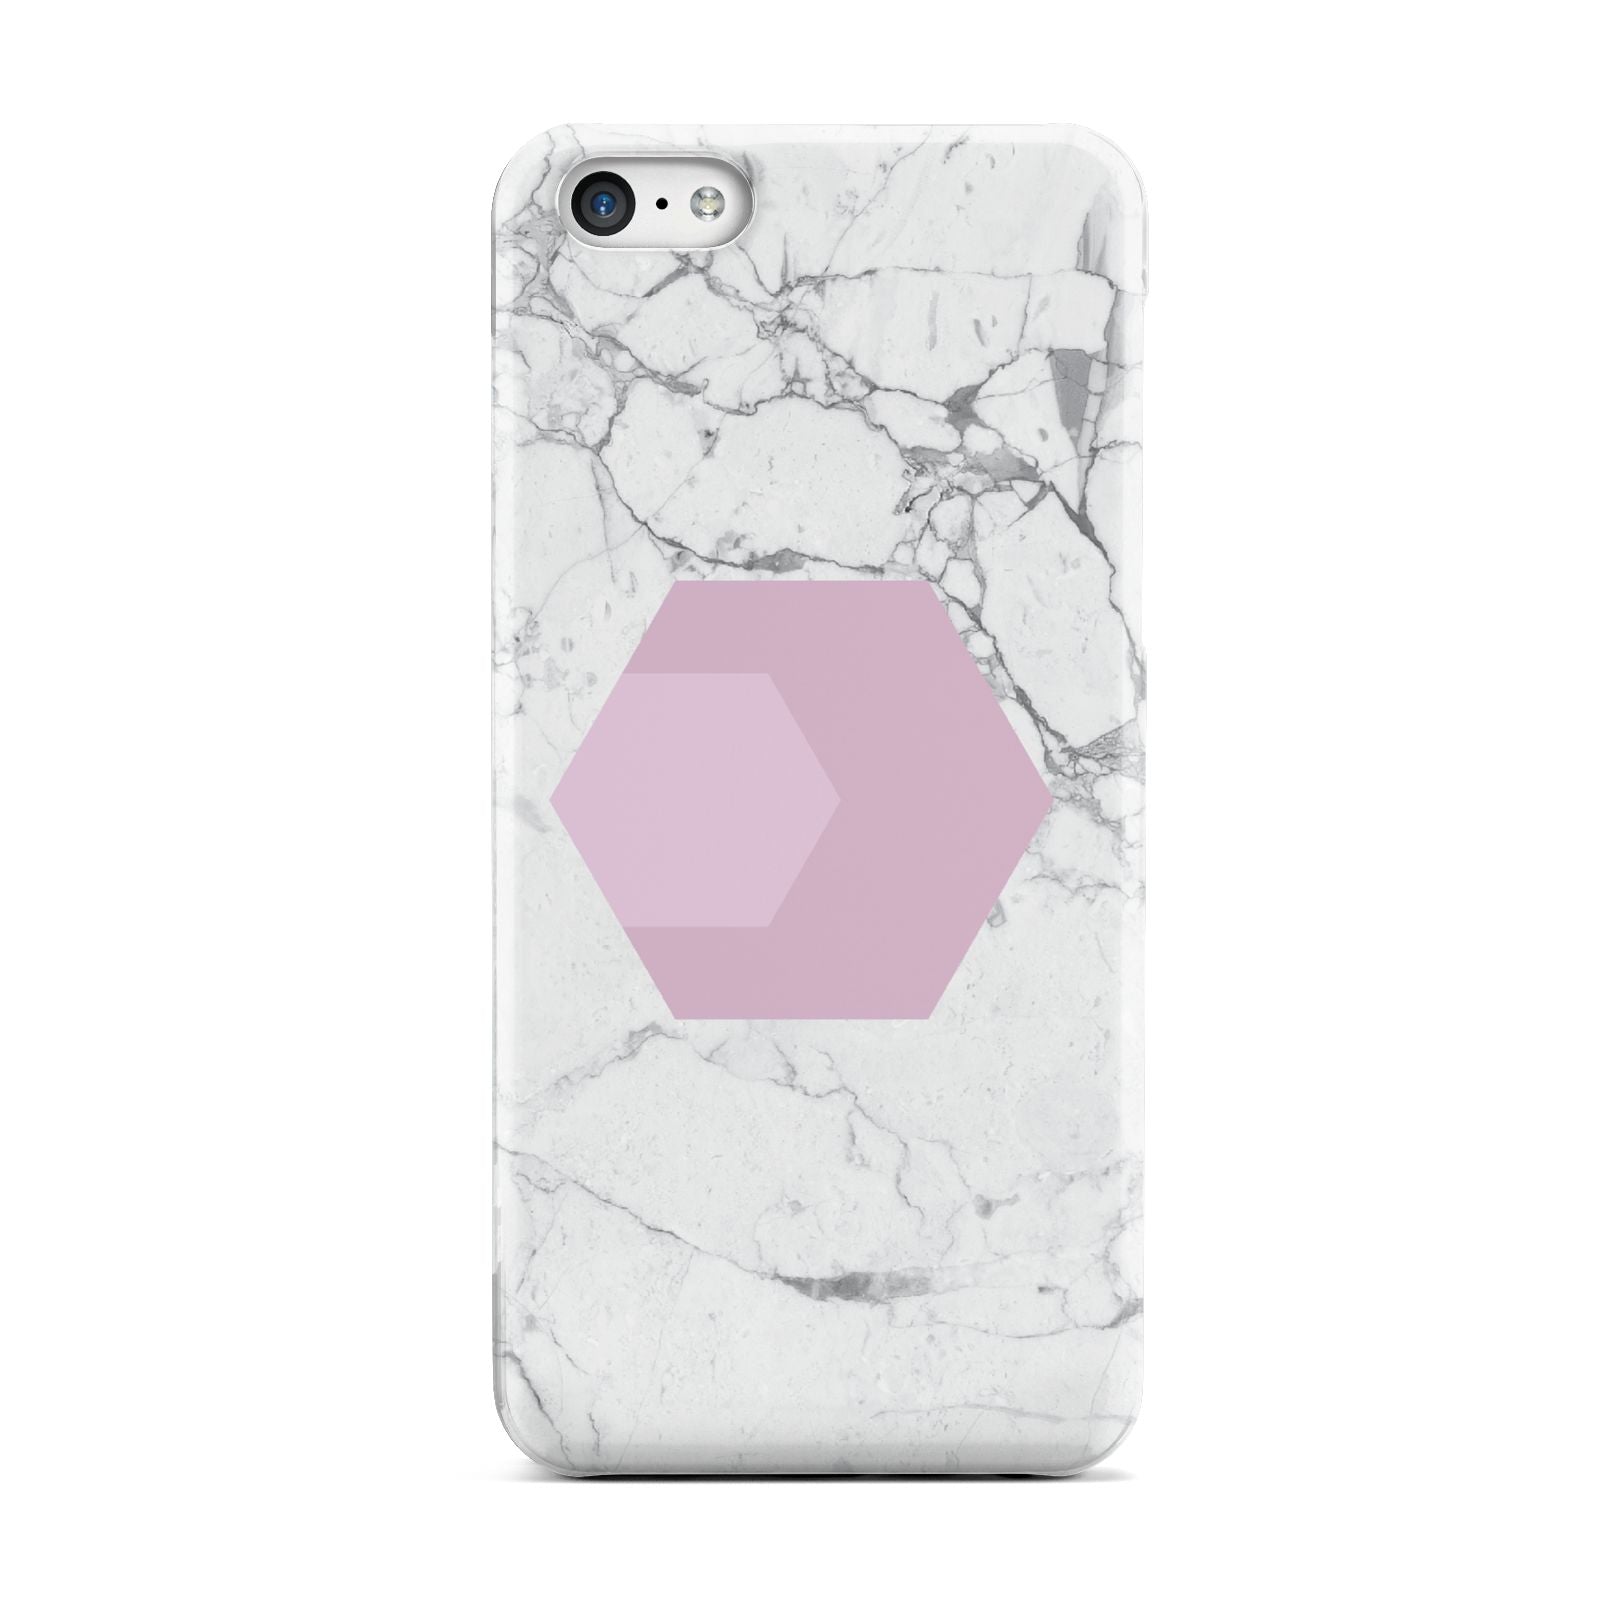 Marble White Grey Carrara Apple iPhone 5c Case